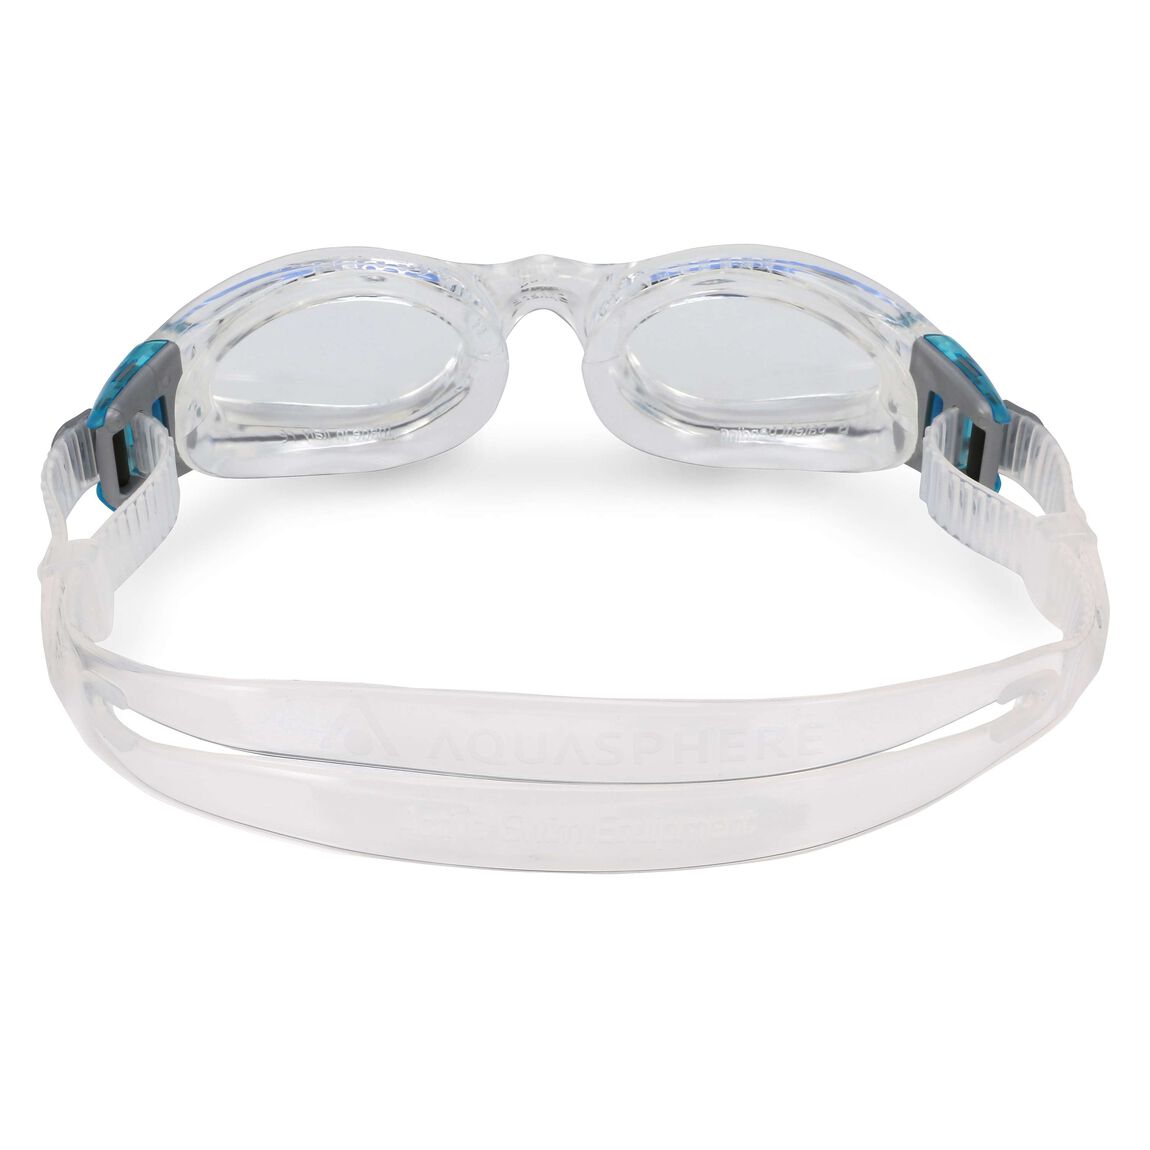 Aquasphere Kaiman Compact Swim Goggles - Transparent/Turquoise